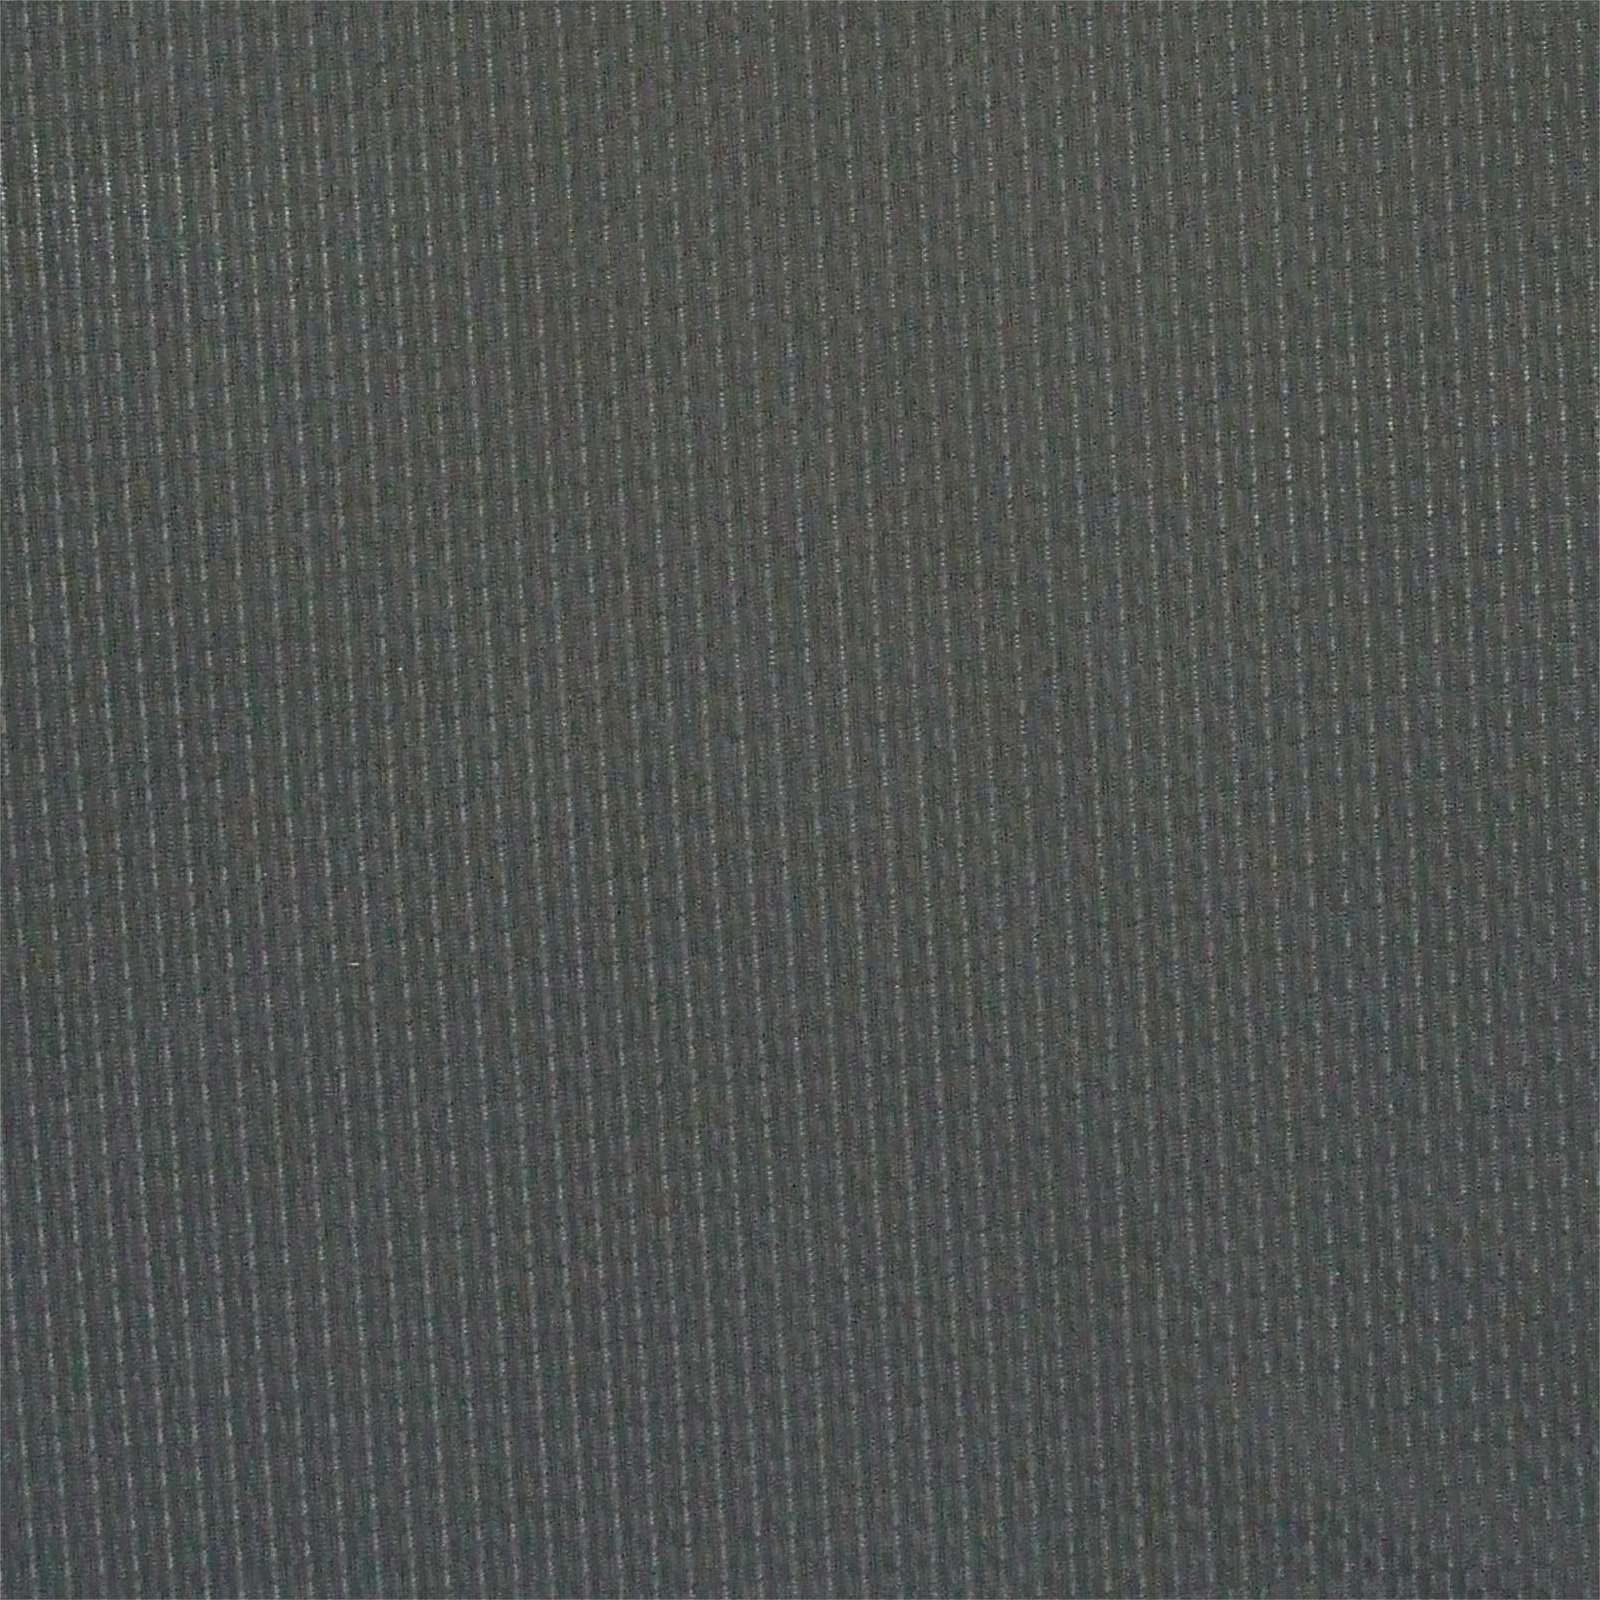 Polyester Spandex Jacquard Yoga Swimming Knitting Fabric